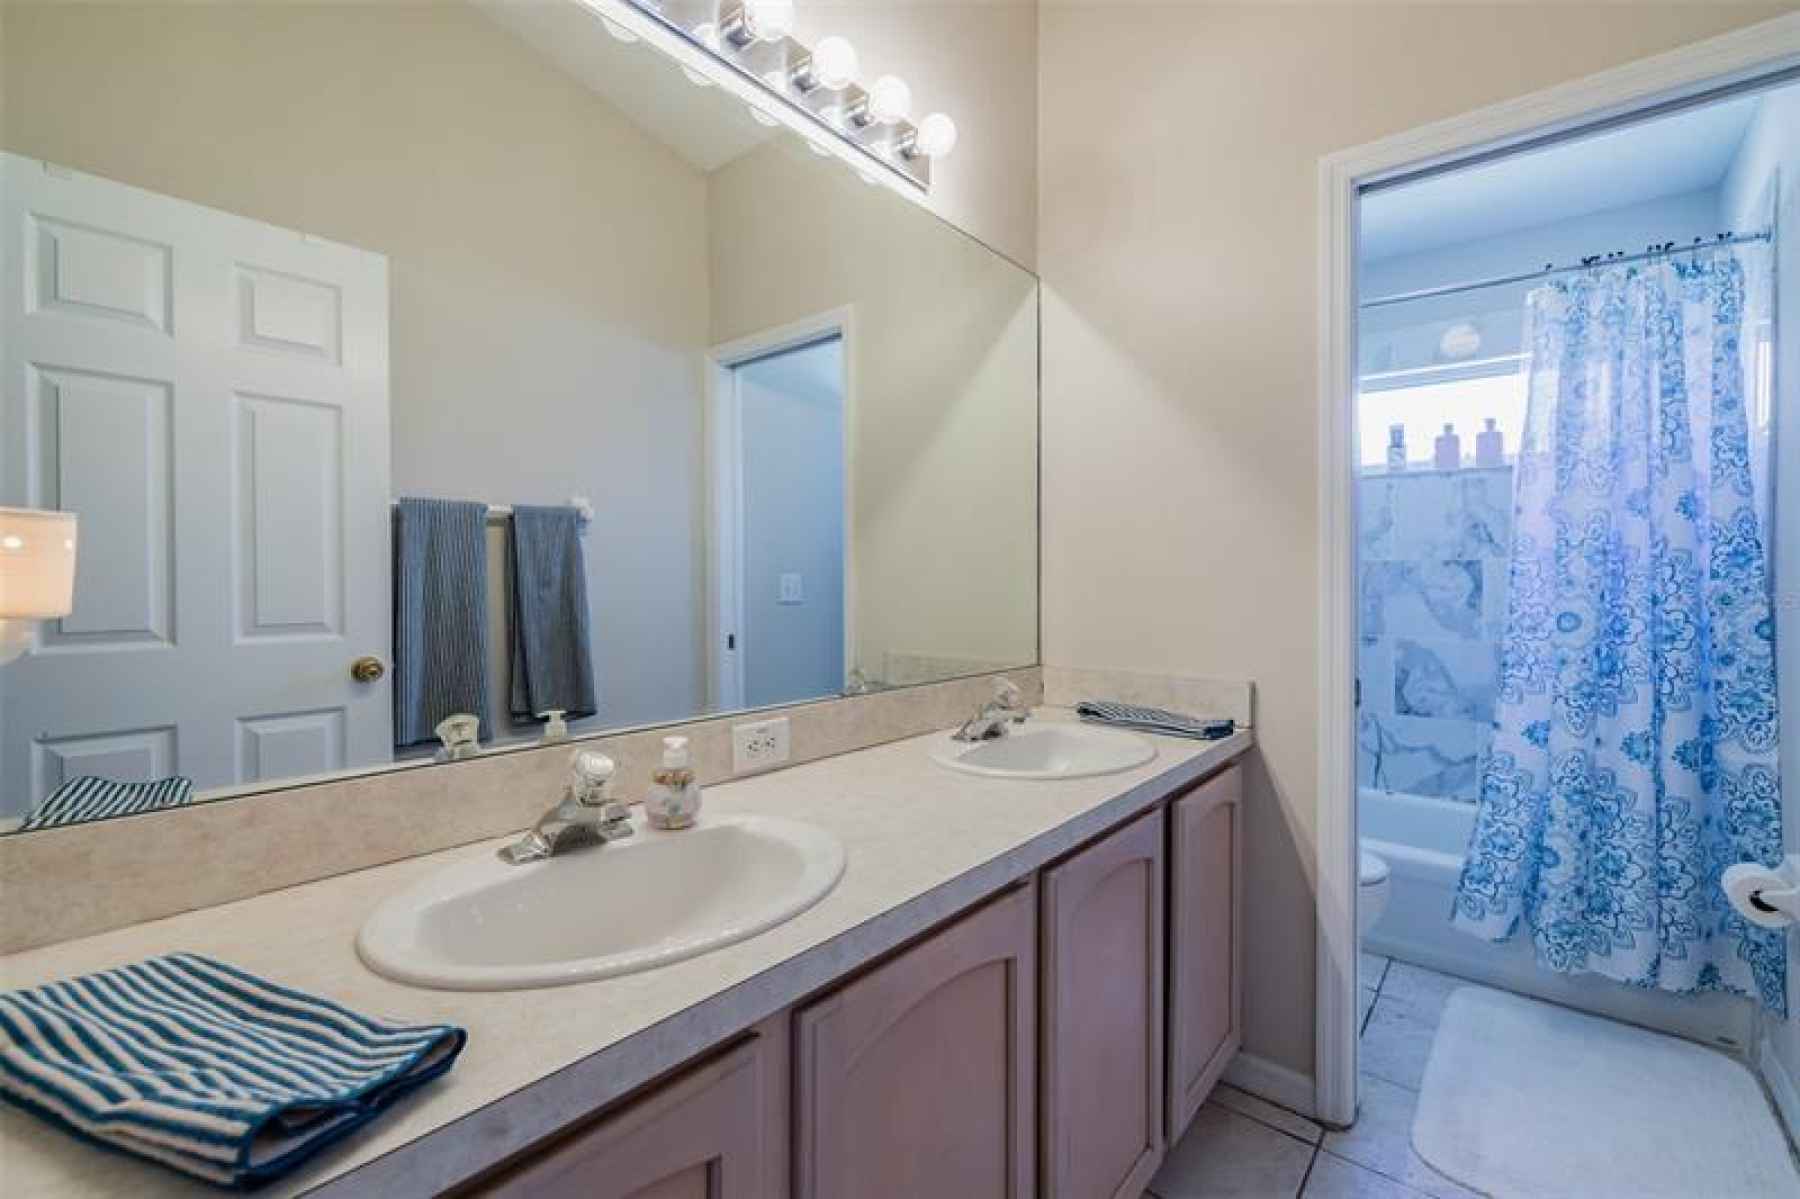 Bathroom 3 has dual sinks and tub/shower combo